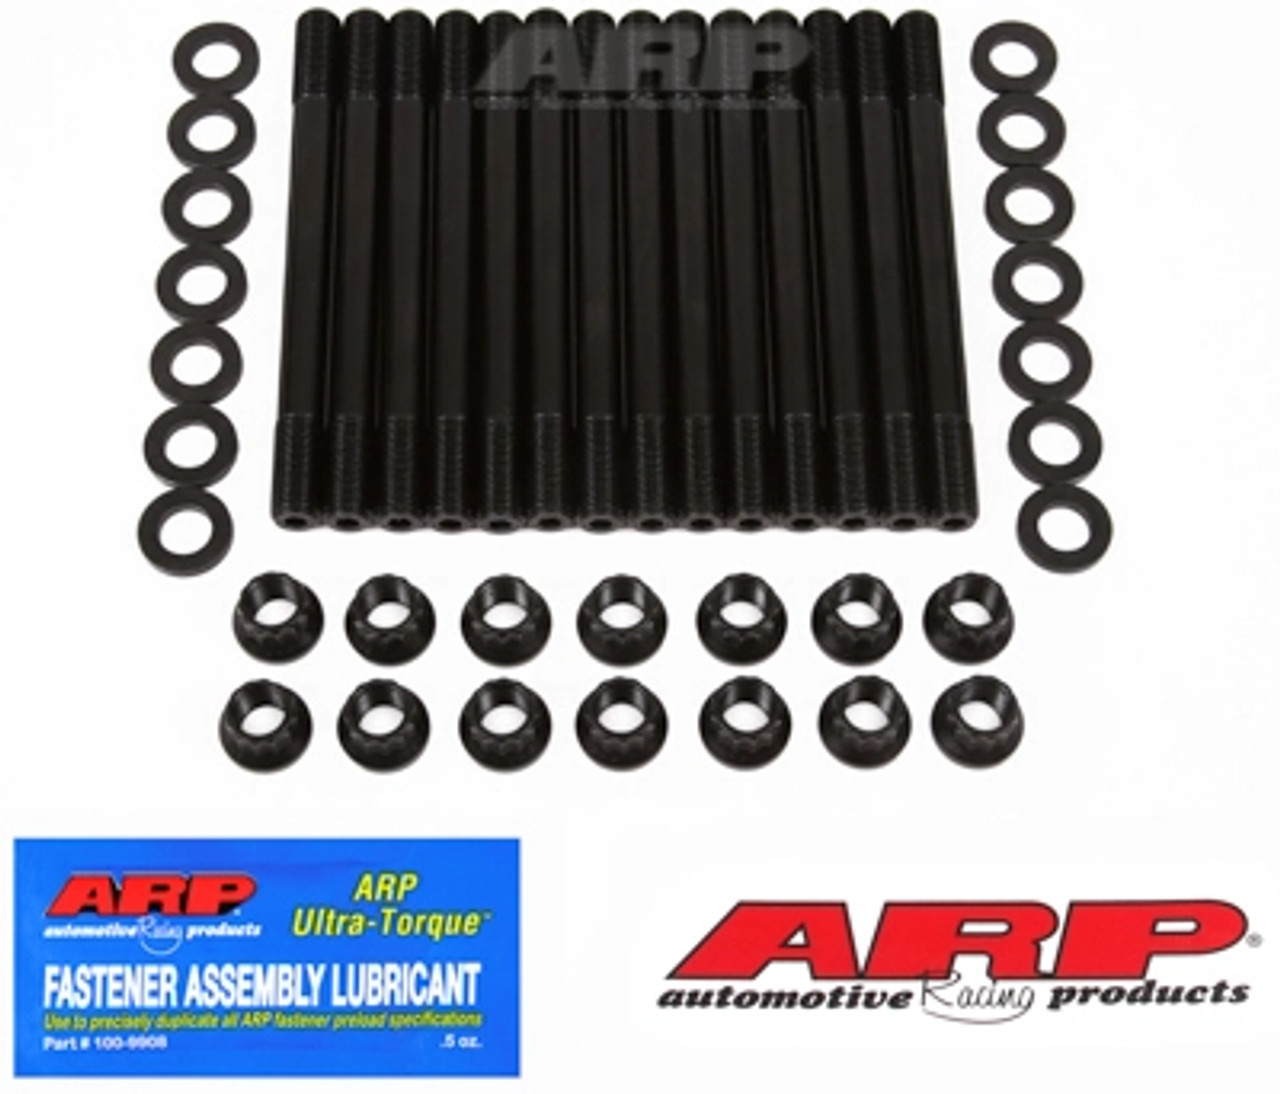 ARP Main Studs Kit | Ford BA/BF/FG Barra 4.0 | ARP152-5402 | 12pt